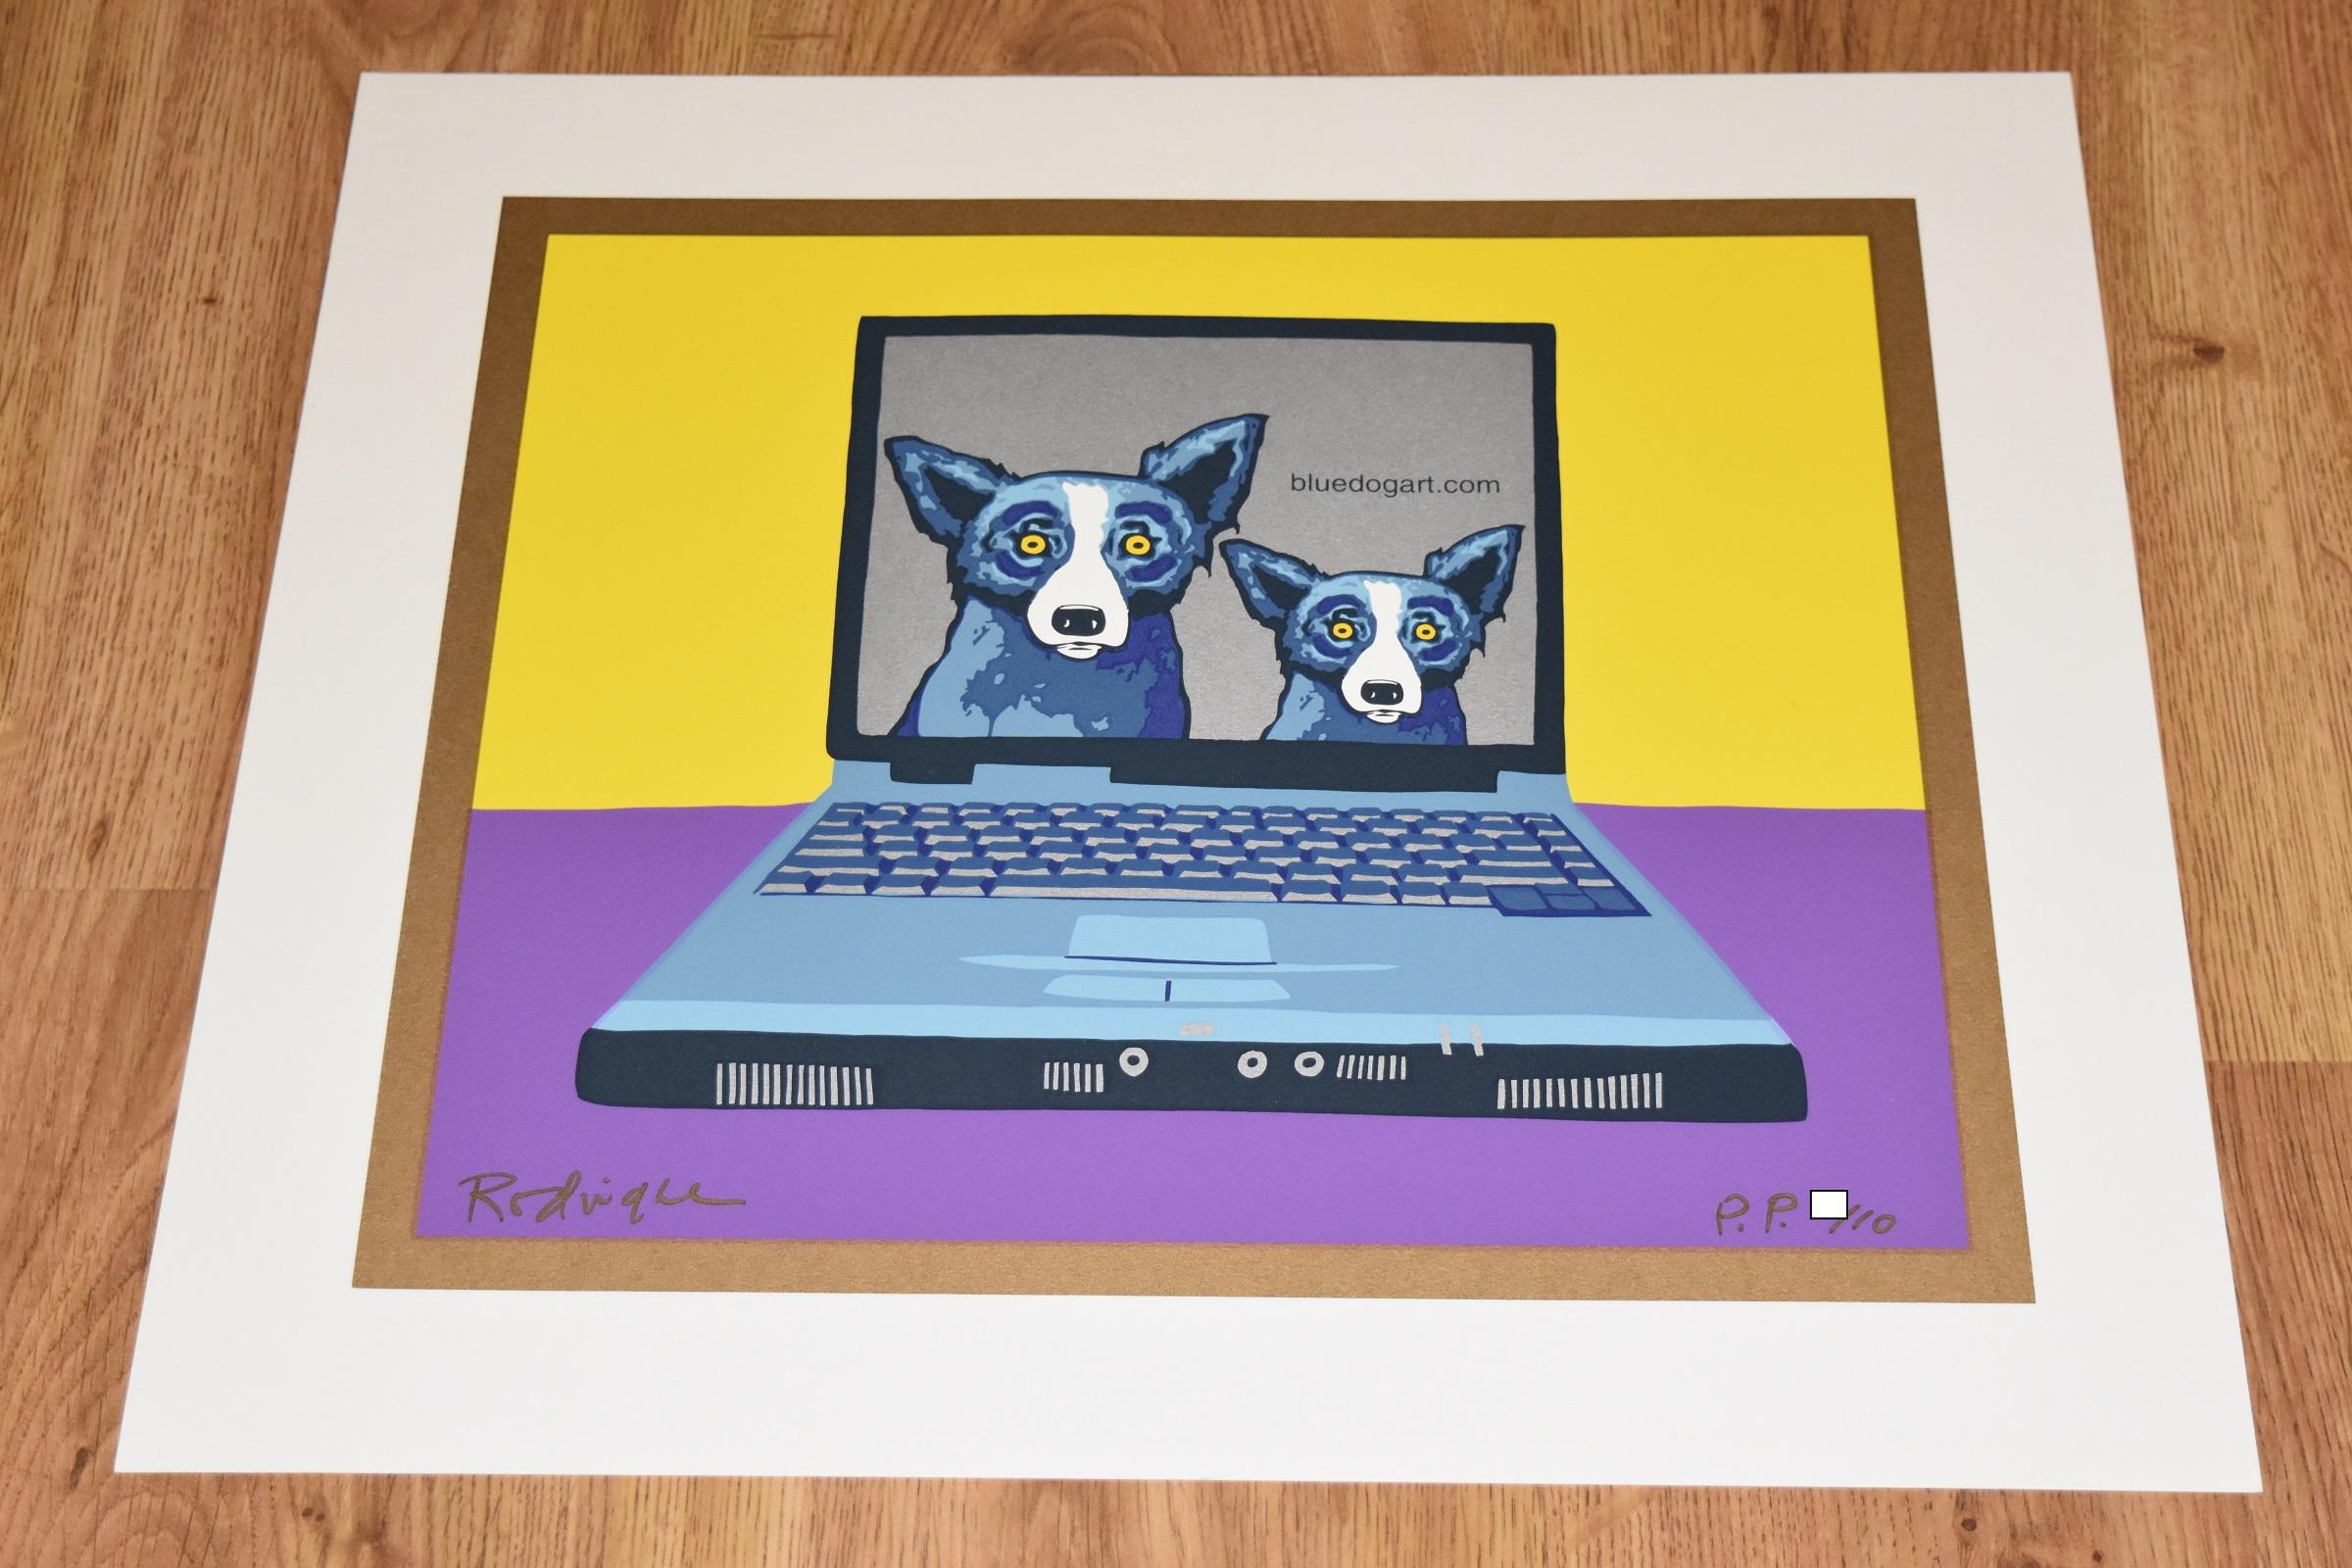 Bluedogart com - Signed Silkscreen Print Blue Dog - Gray Animal Print by George Rodrigue